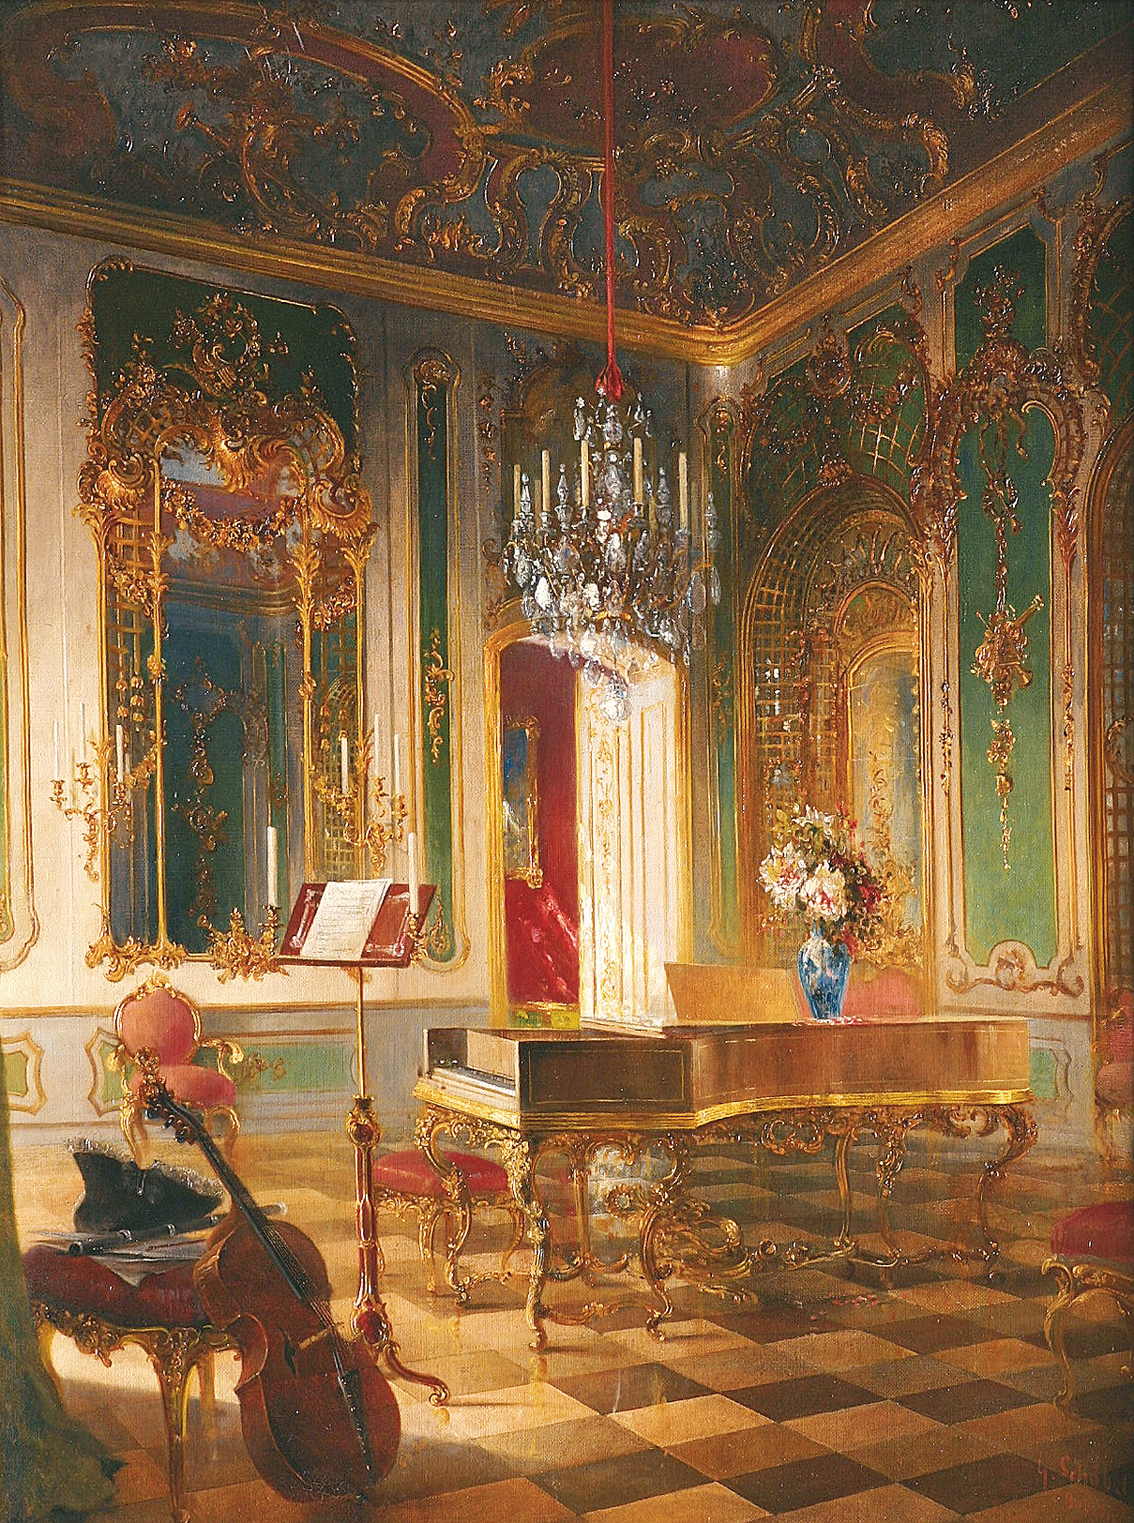 "The music-hall of King 'Friedrich der Große' in Sanssouci Castle (Potsdam)